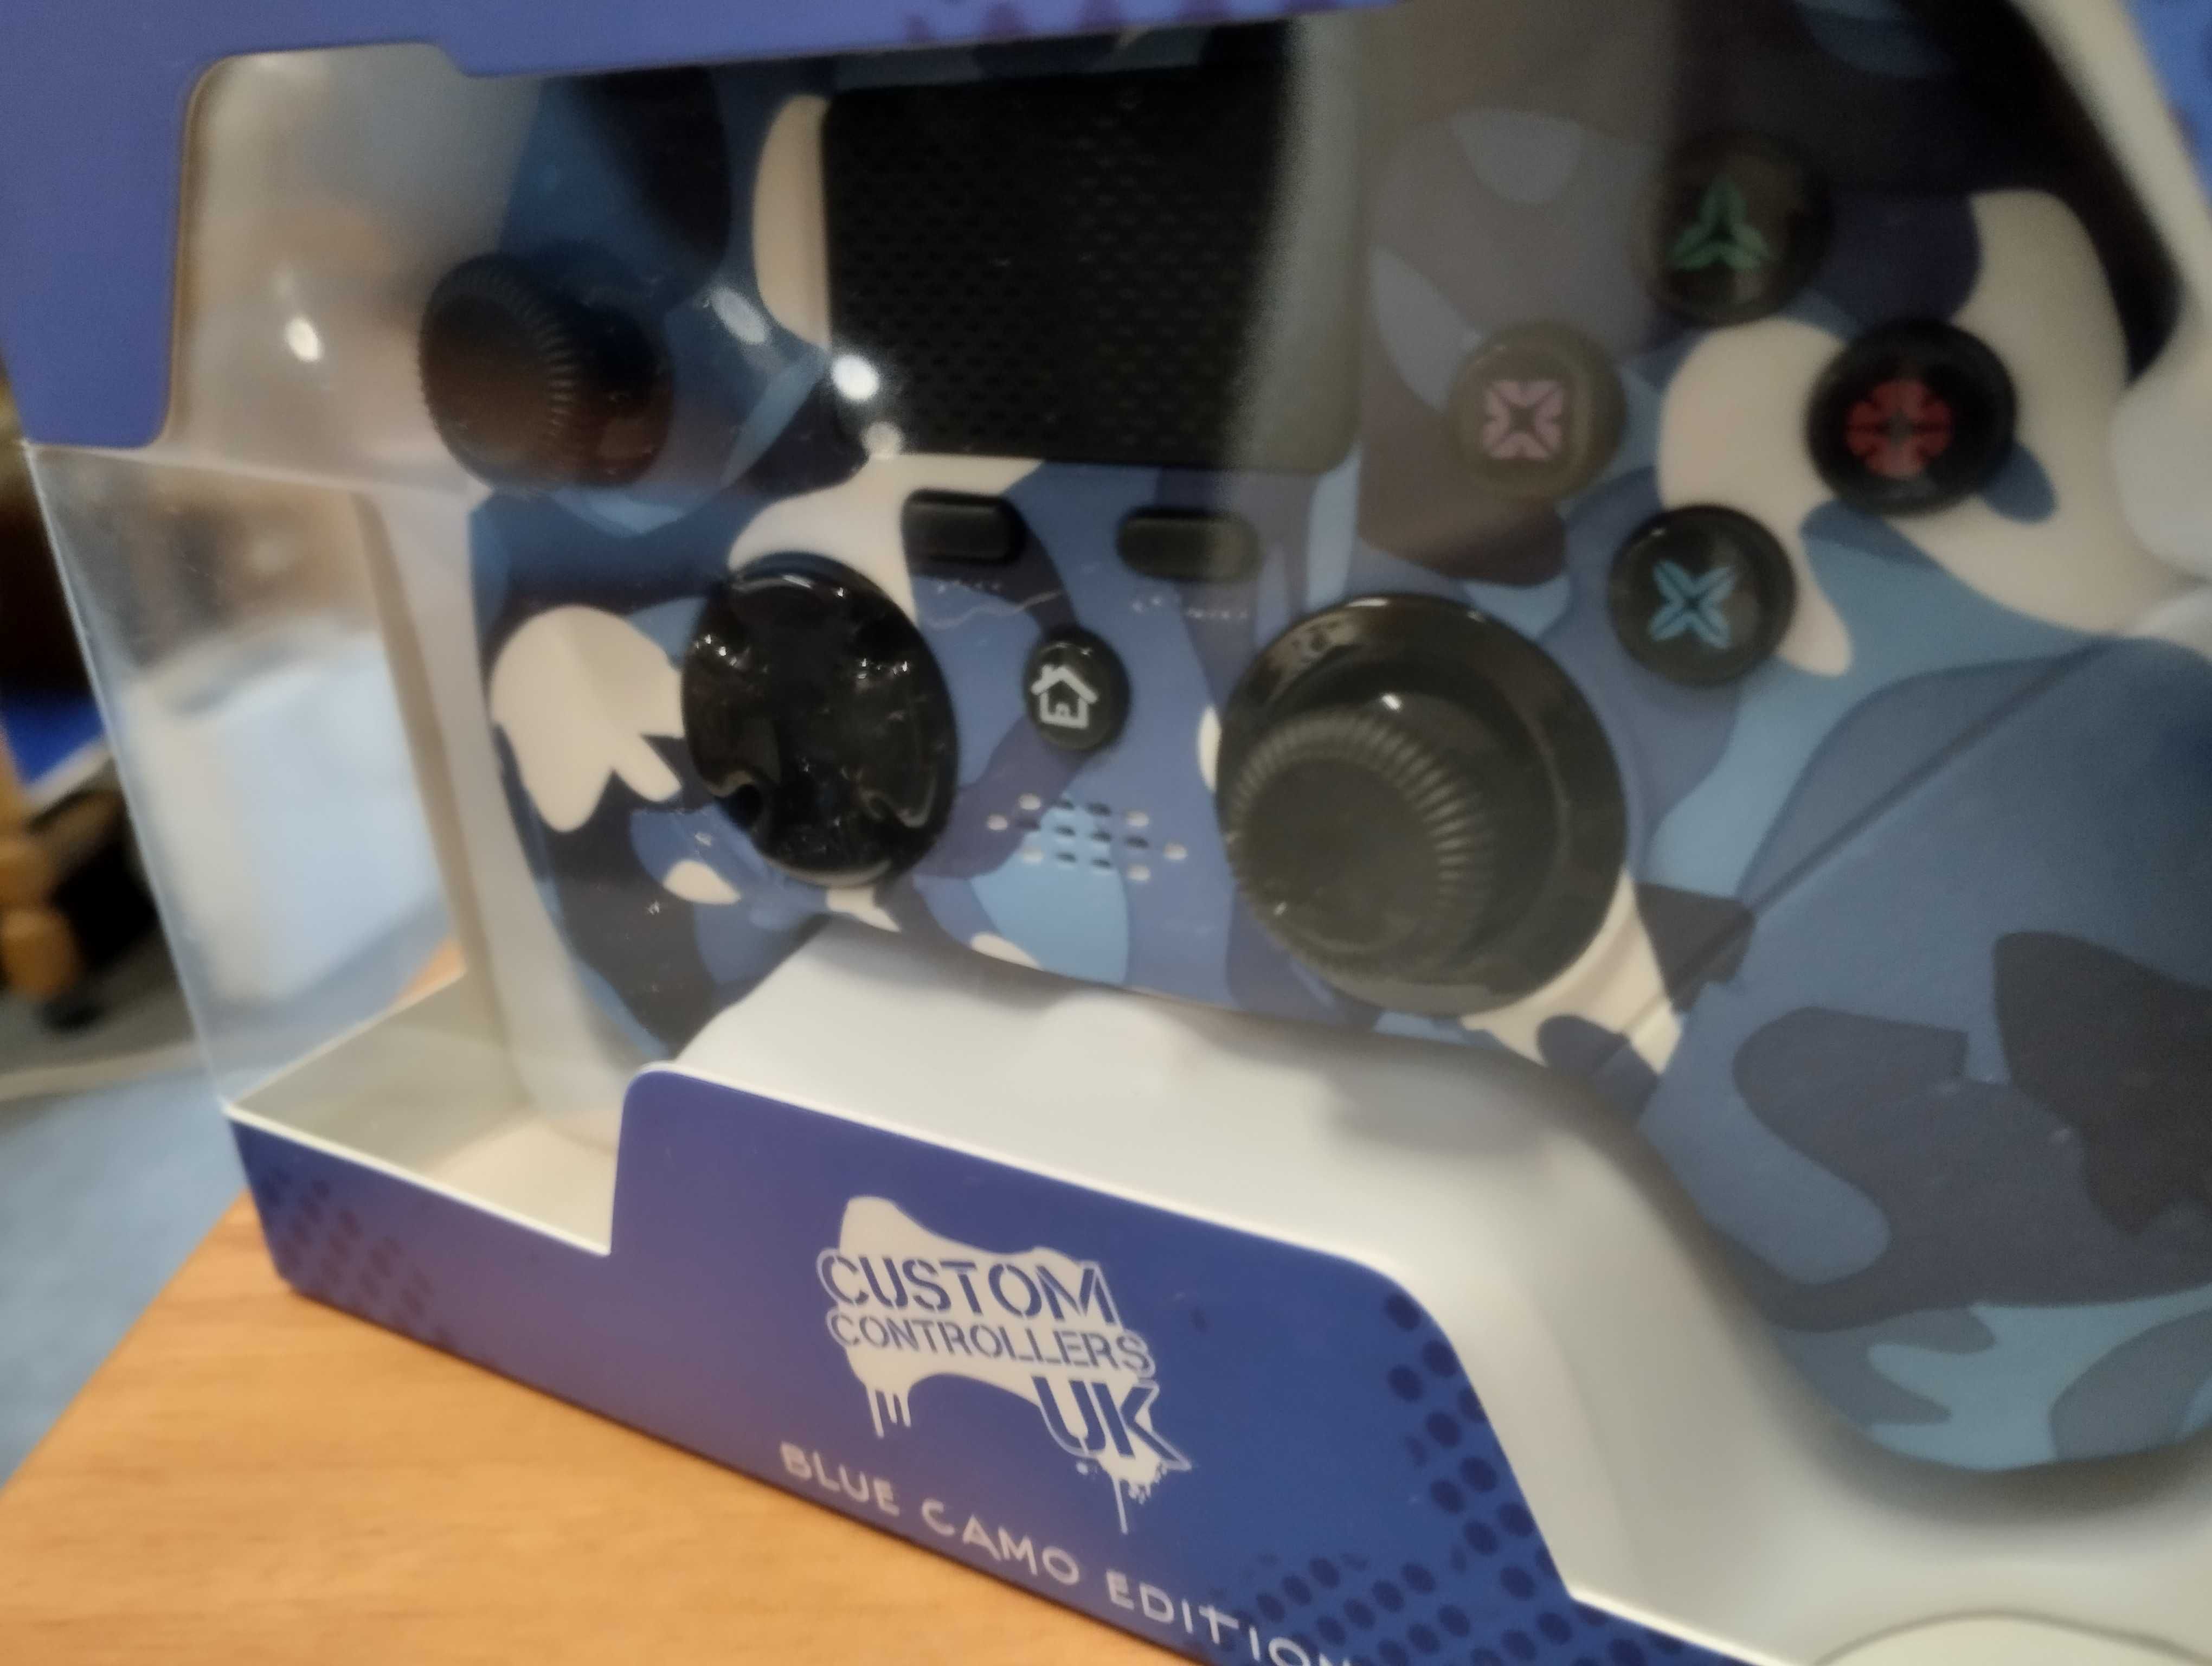 kontroler PS4 blue camo edition